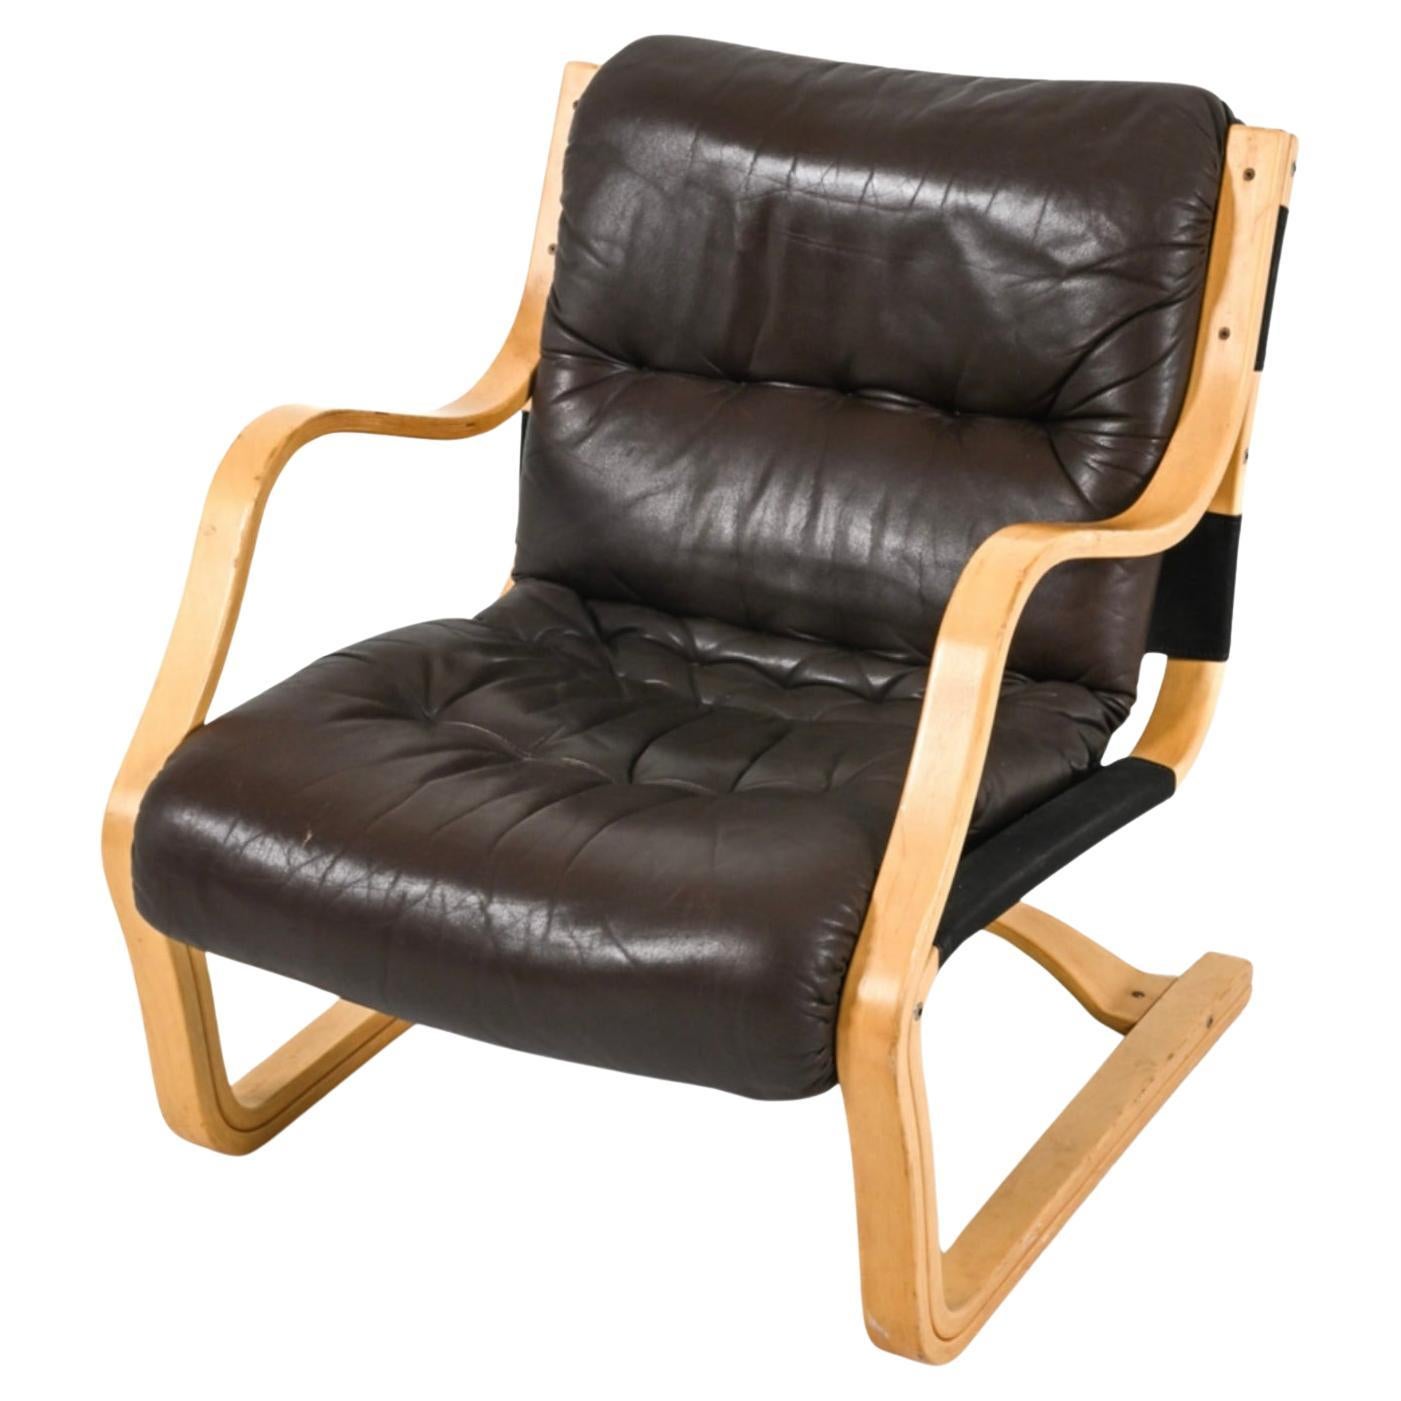 Esko Pajamies for ASKO Leather 'Koivutaru' Lounge Chair